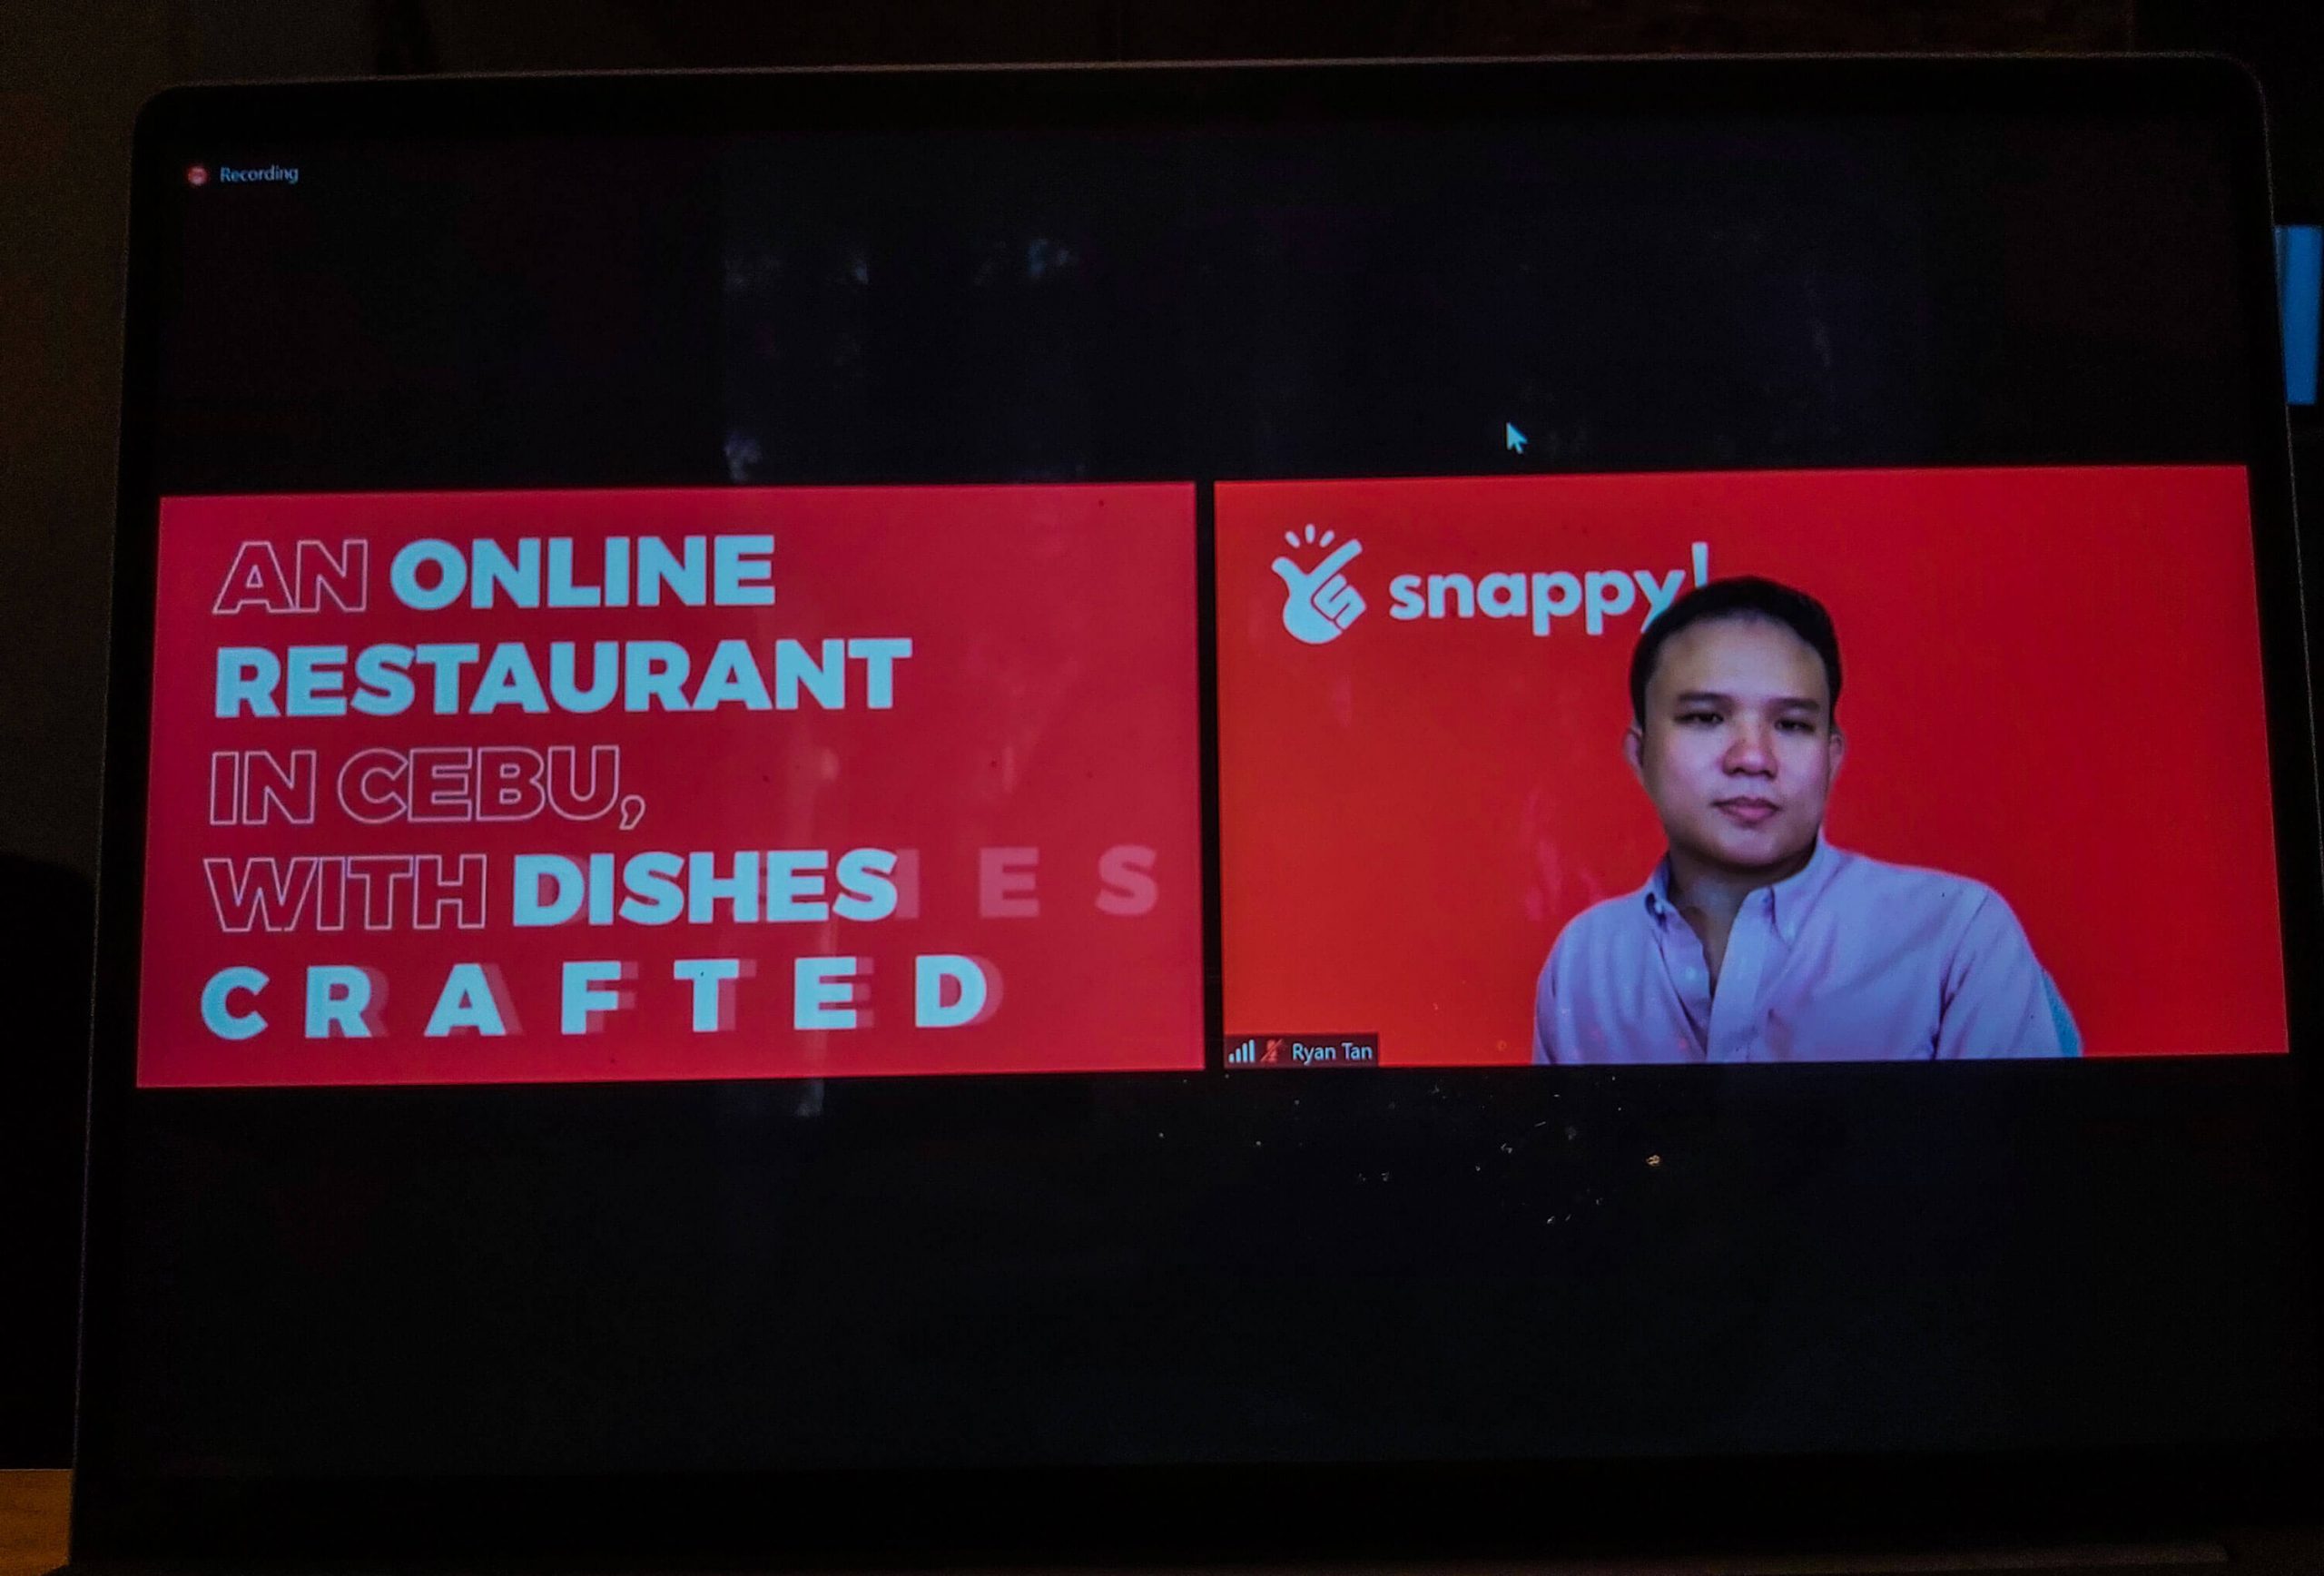 Snappy! Co-founder Ryan Tan